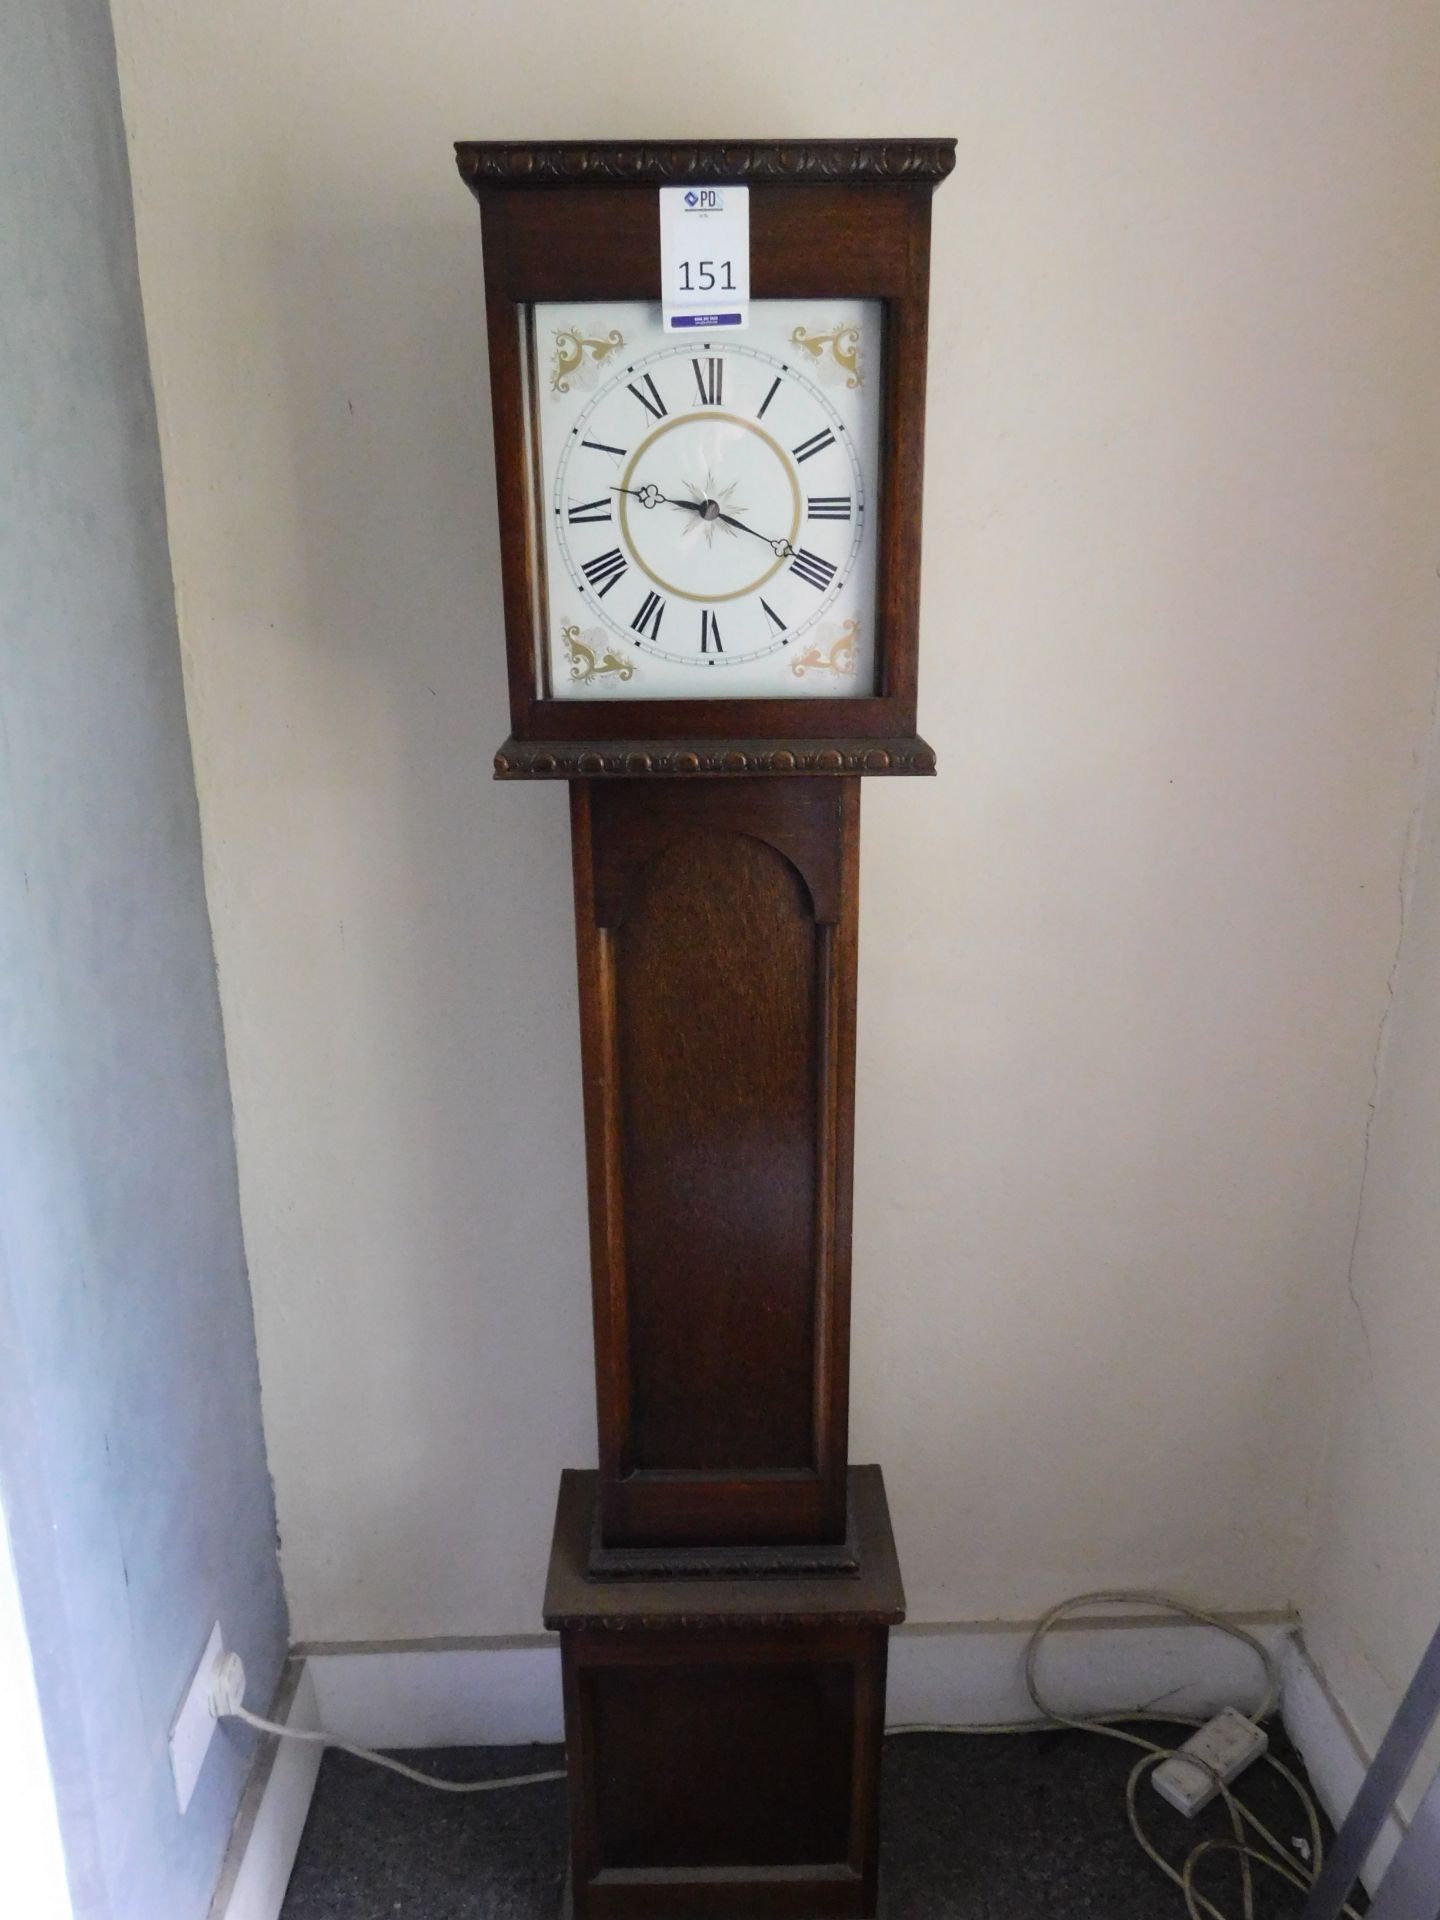 Ex-Display Reproduction Granddaughter Clock in Medium Oak Case (Location: Romford. Please Refer to